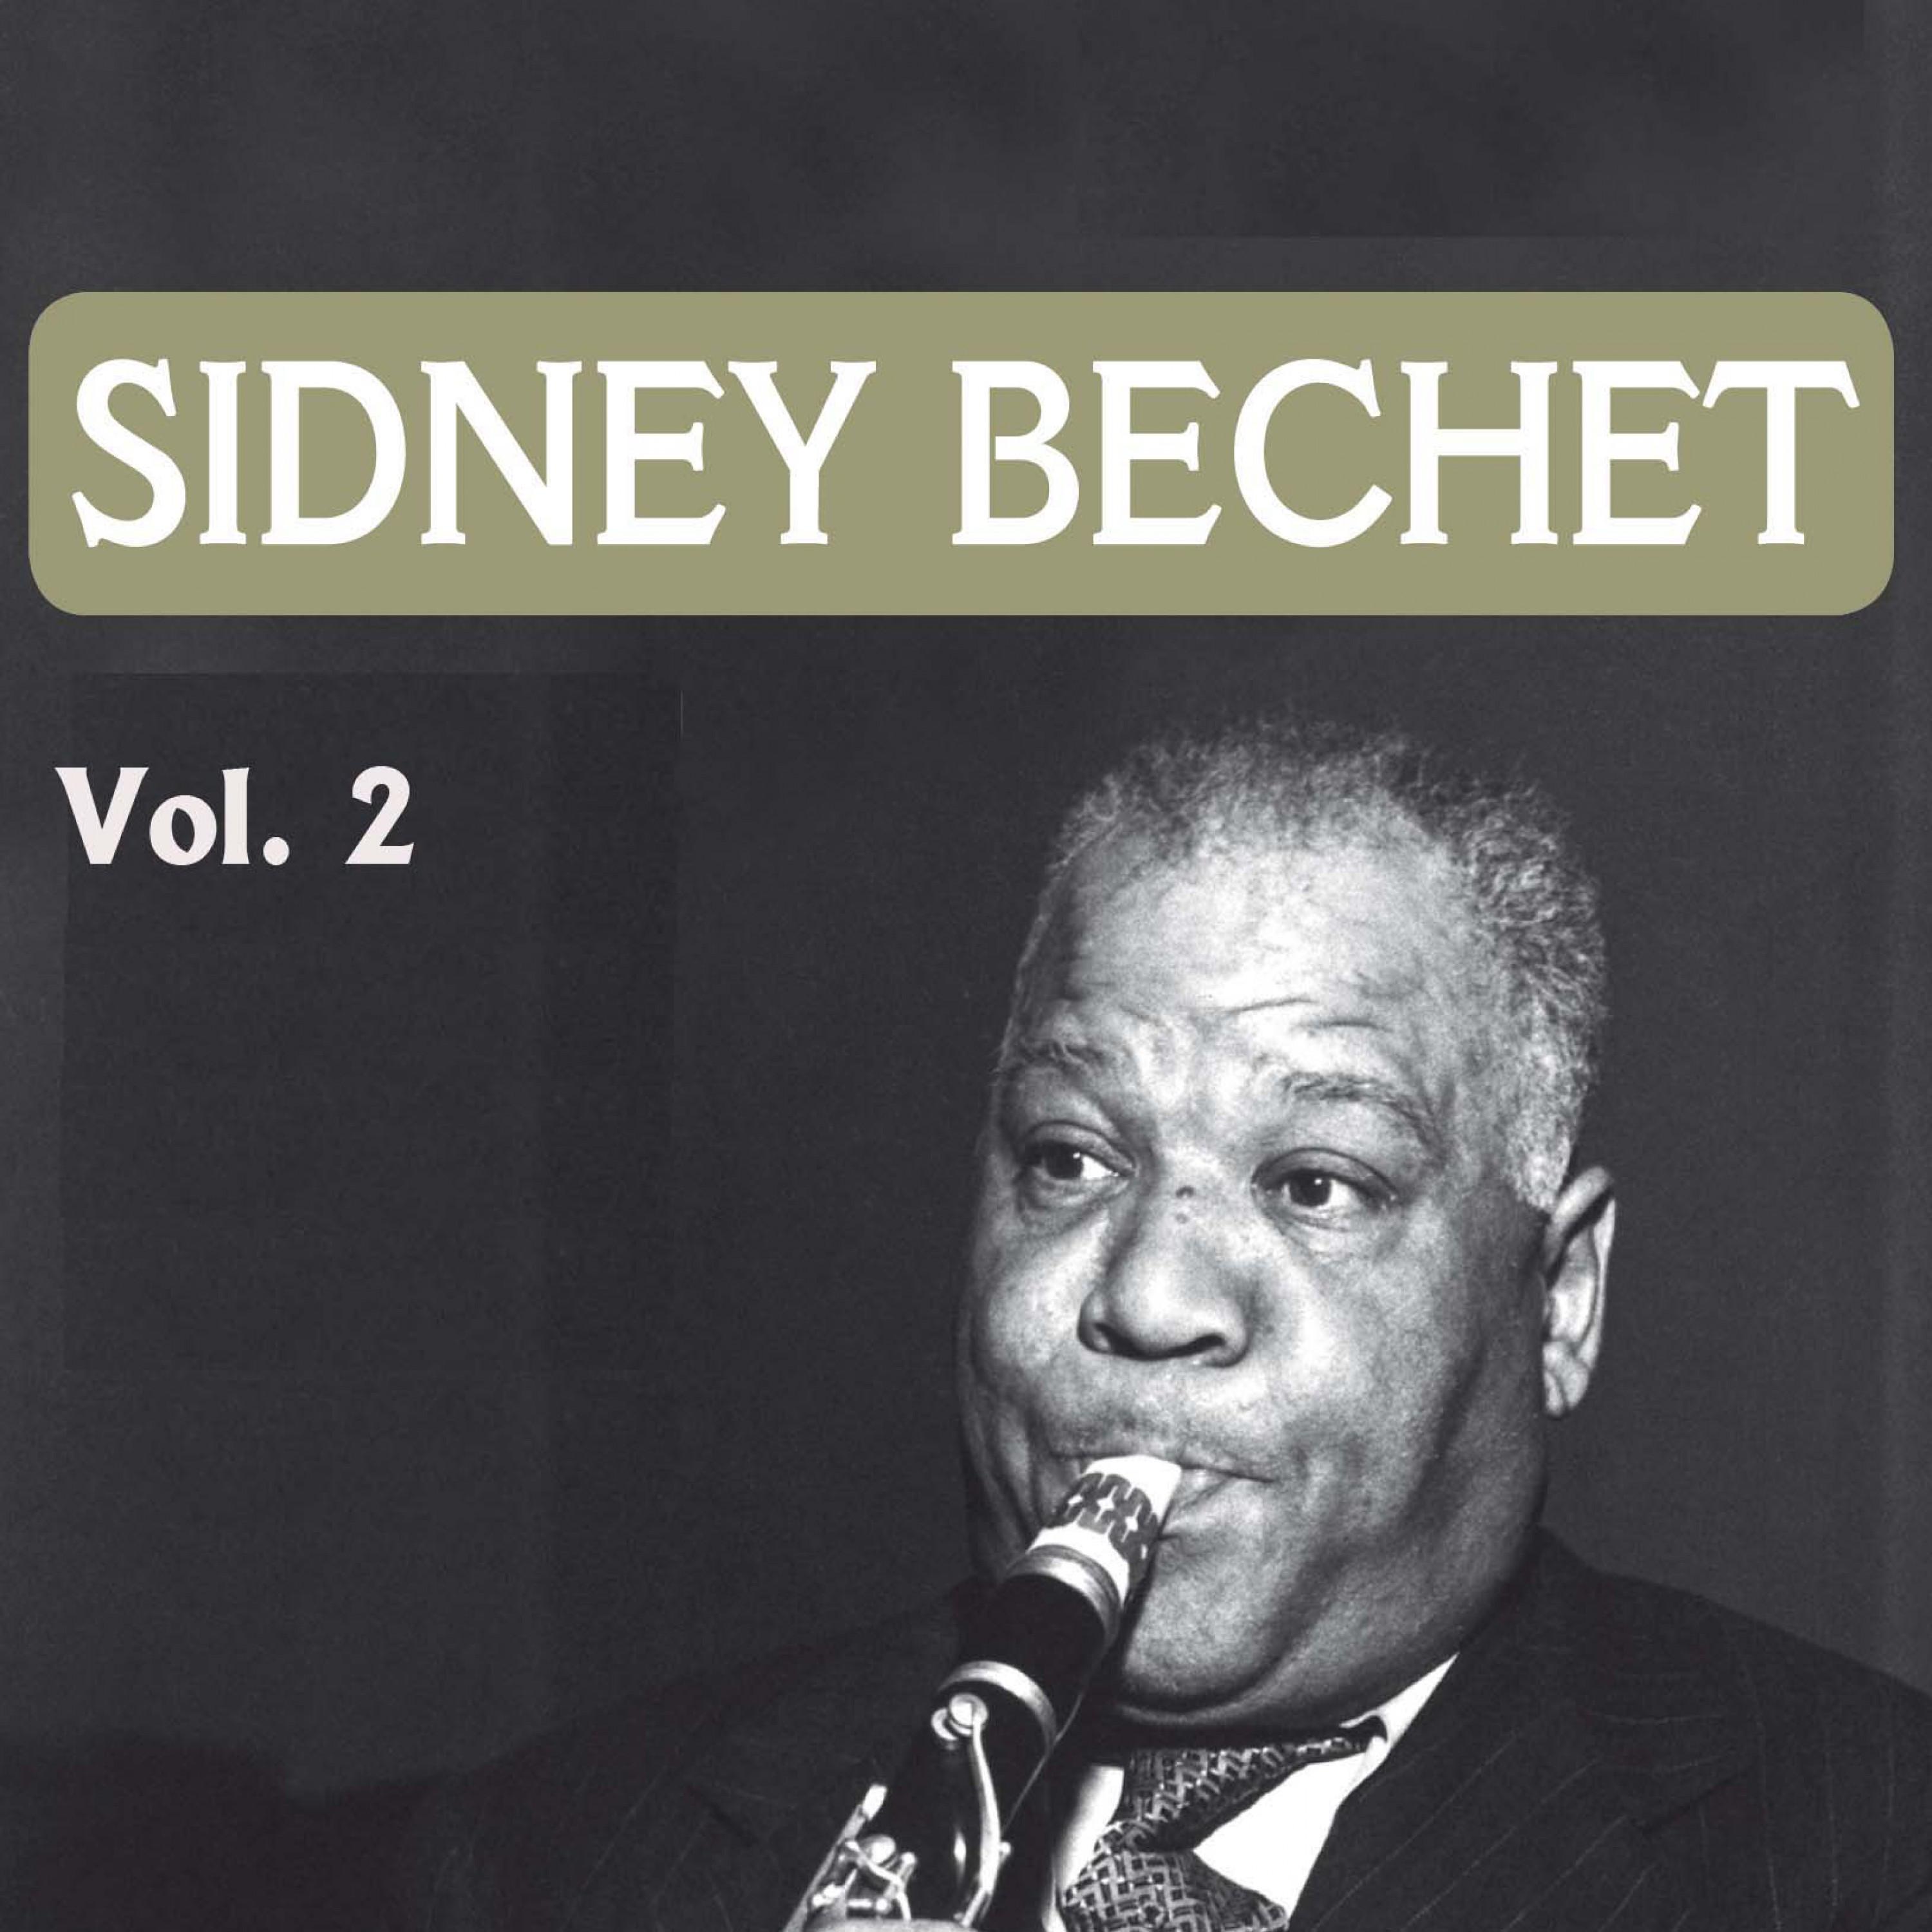 Sidney Bechet Vol. 2